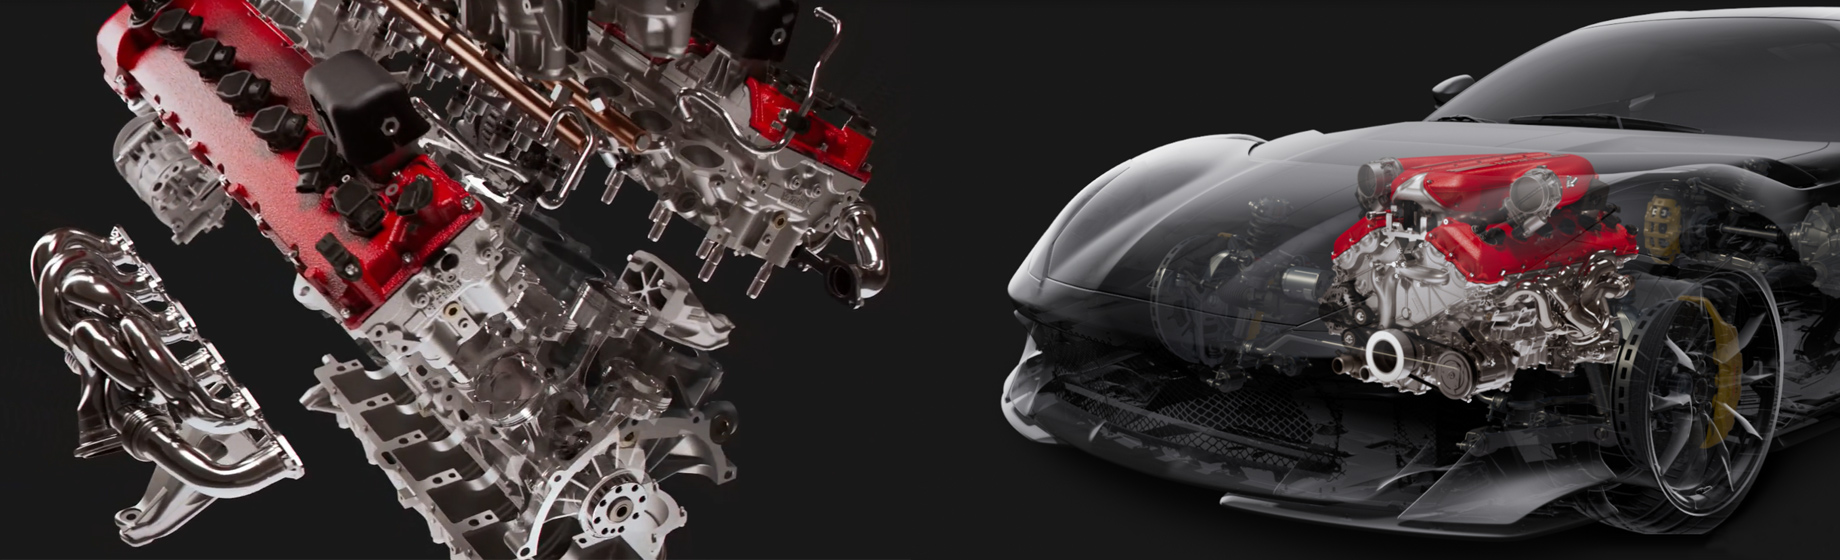 Ferrari готовит ещё более мощный мотор V12